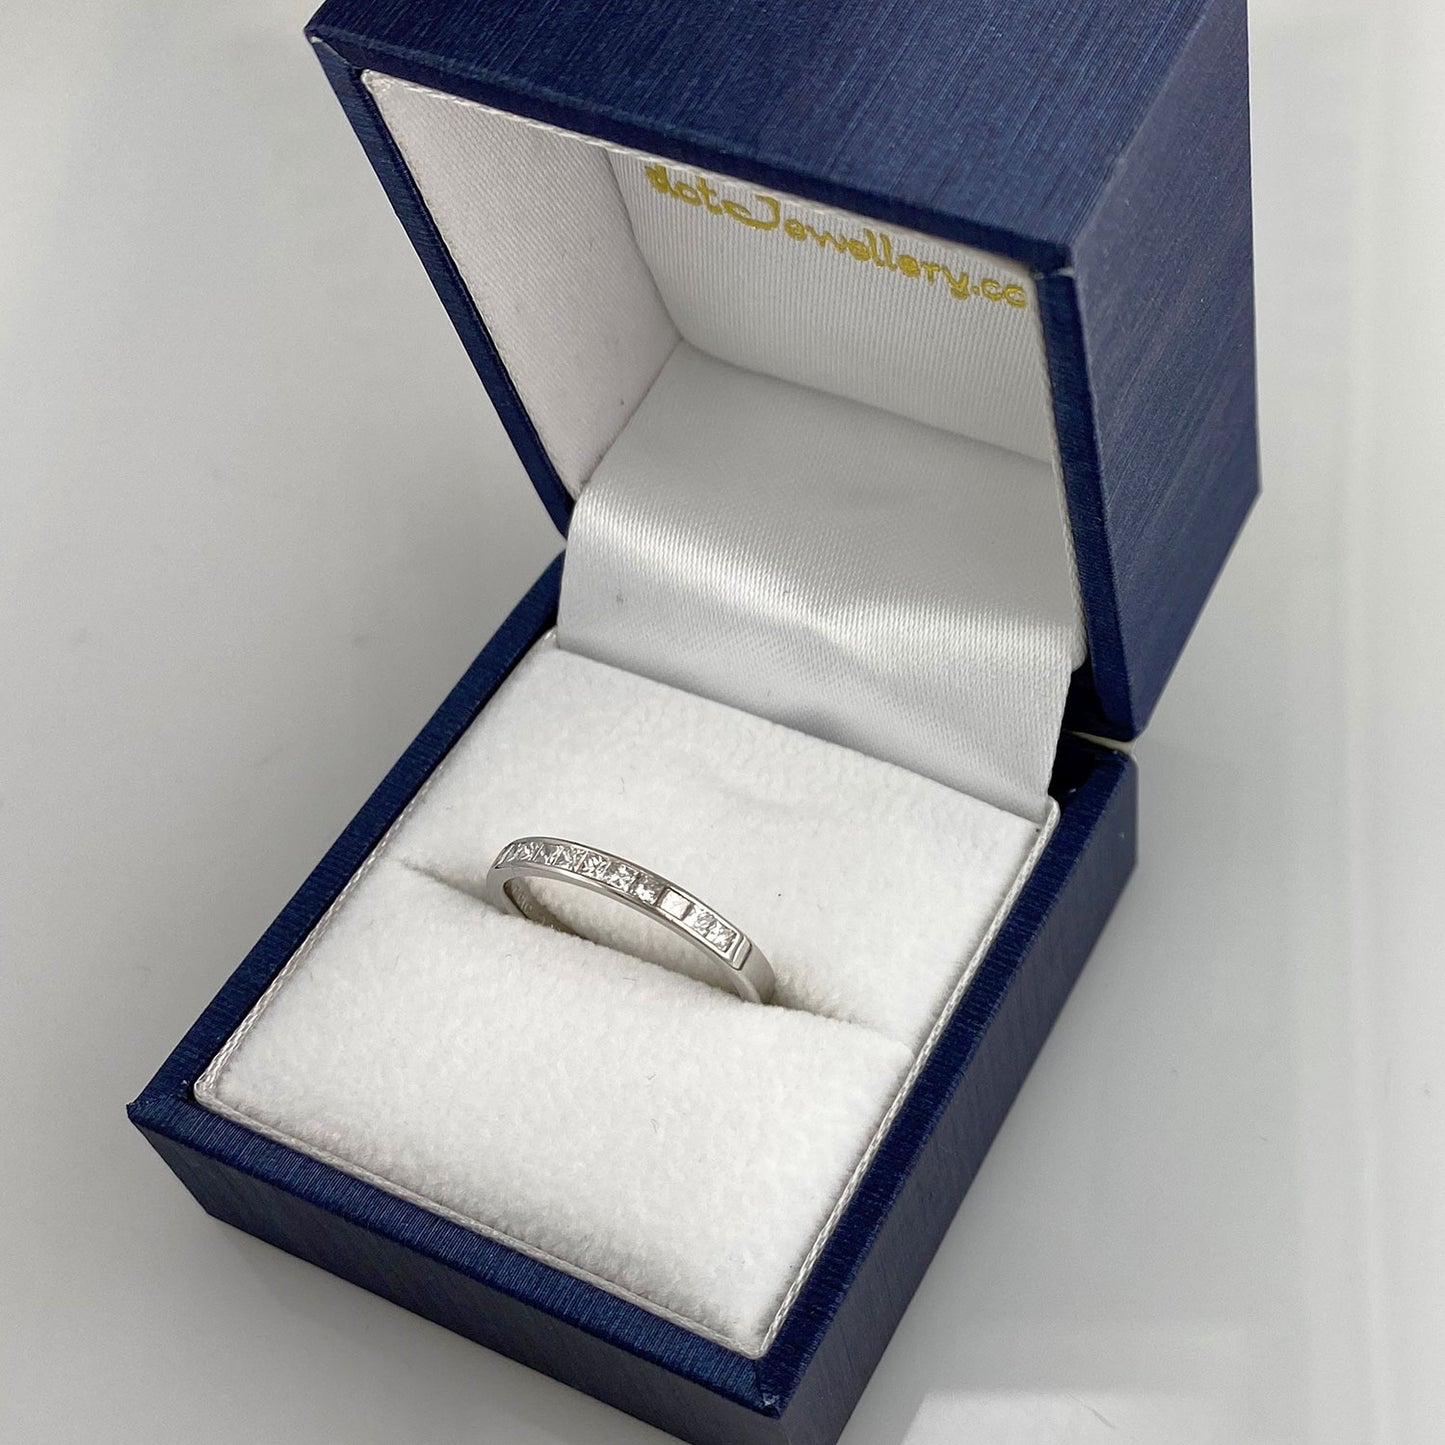 Channel Set Diamond 18ct White Gold 2.5mm Wedding Ring